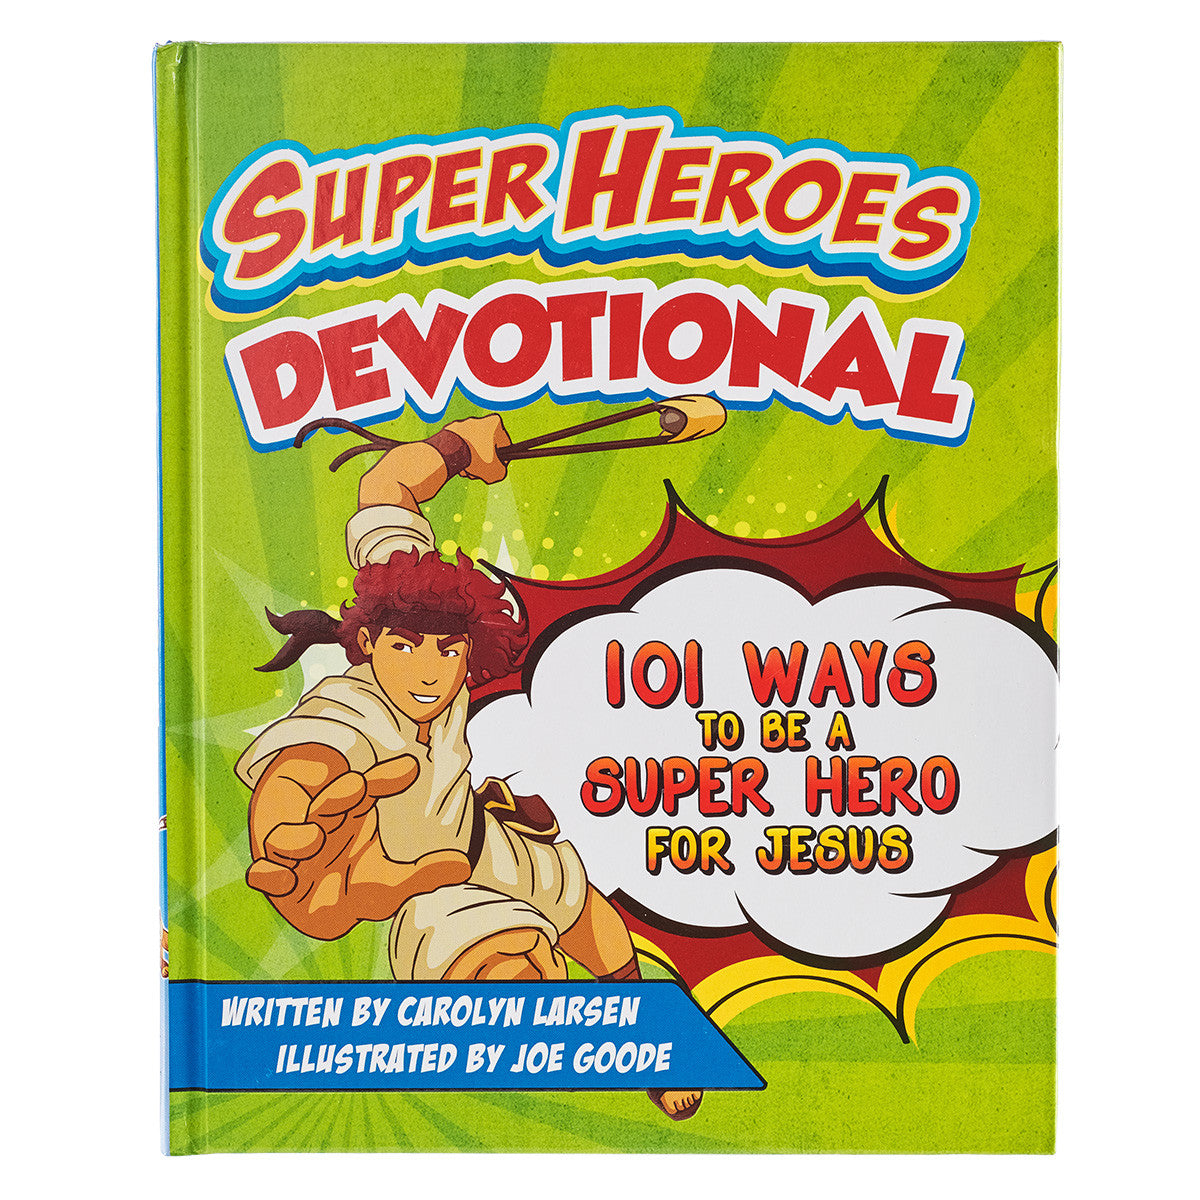 SUPER HEROS DEVOTIONAL